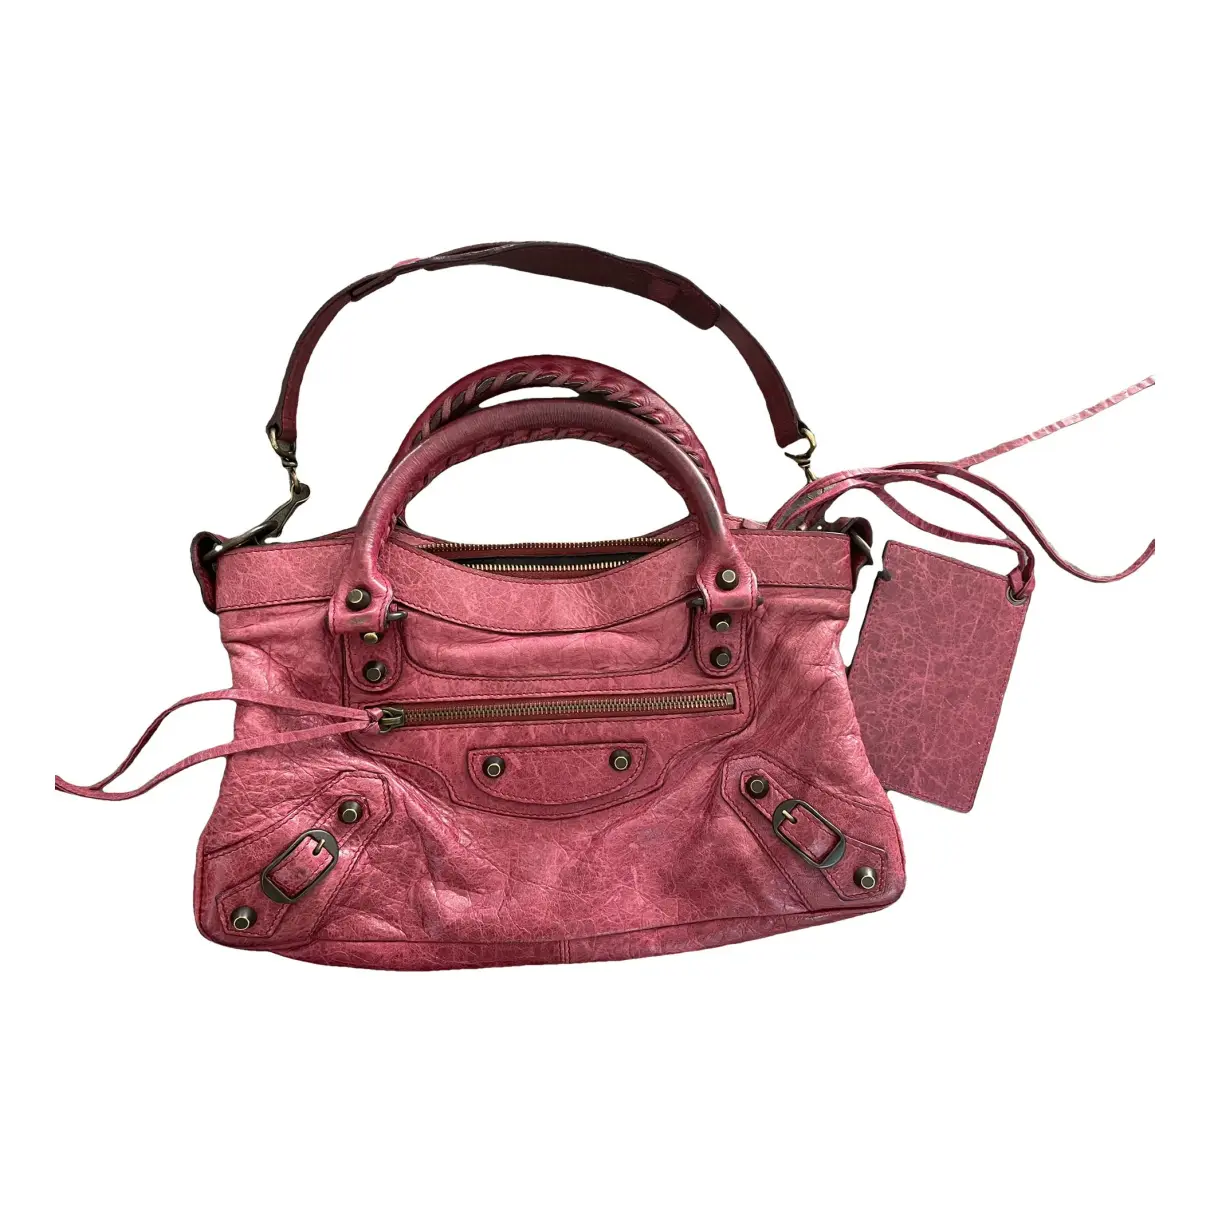 First leather handbag